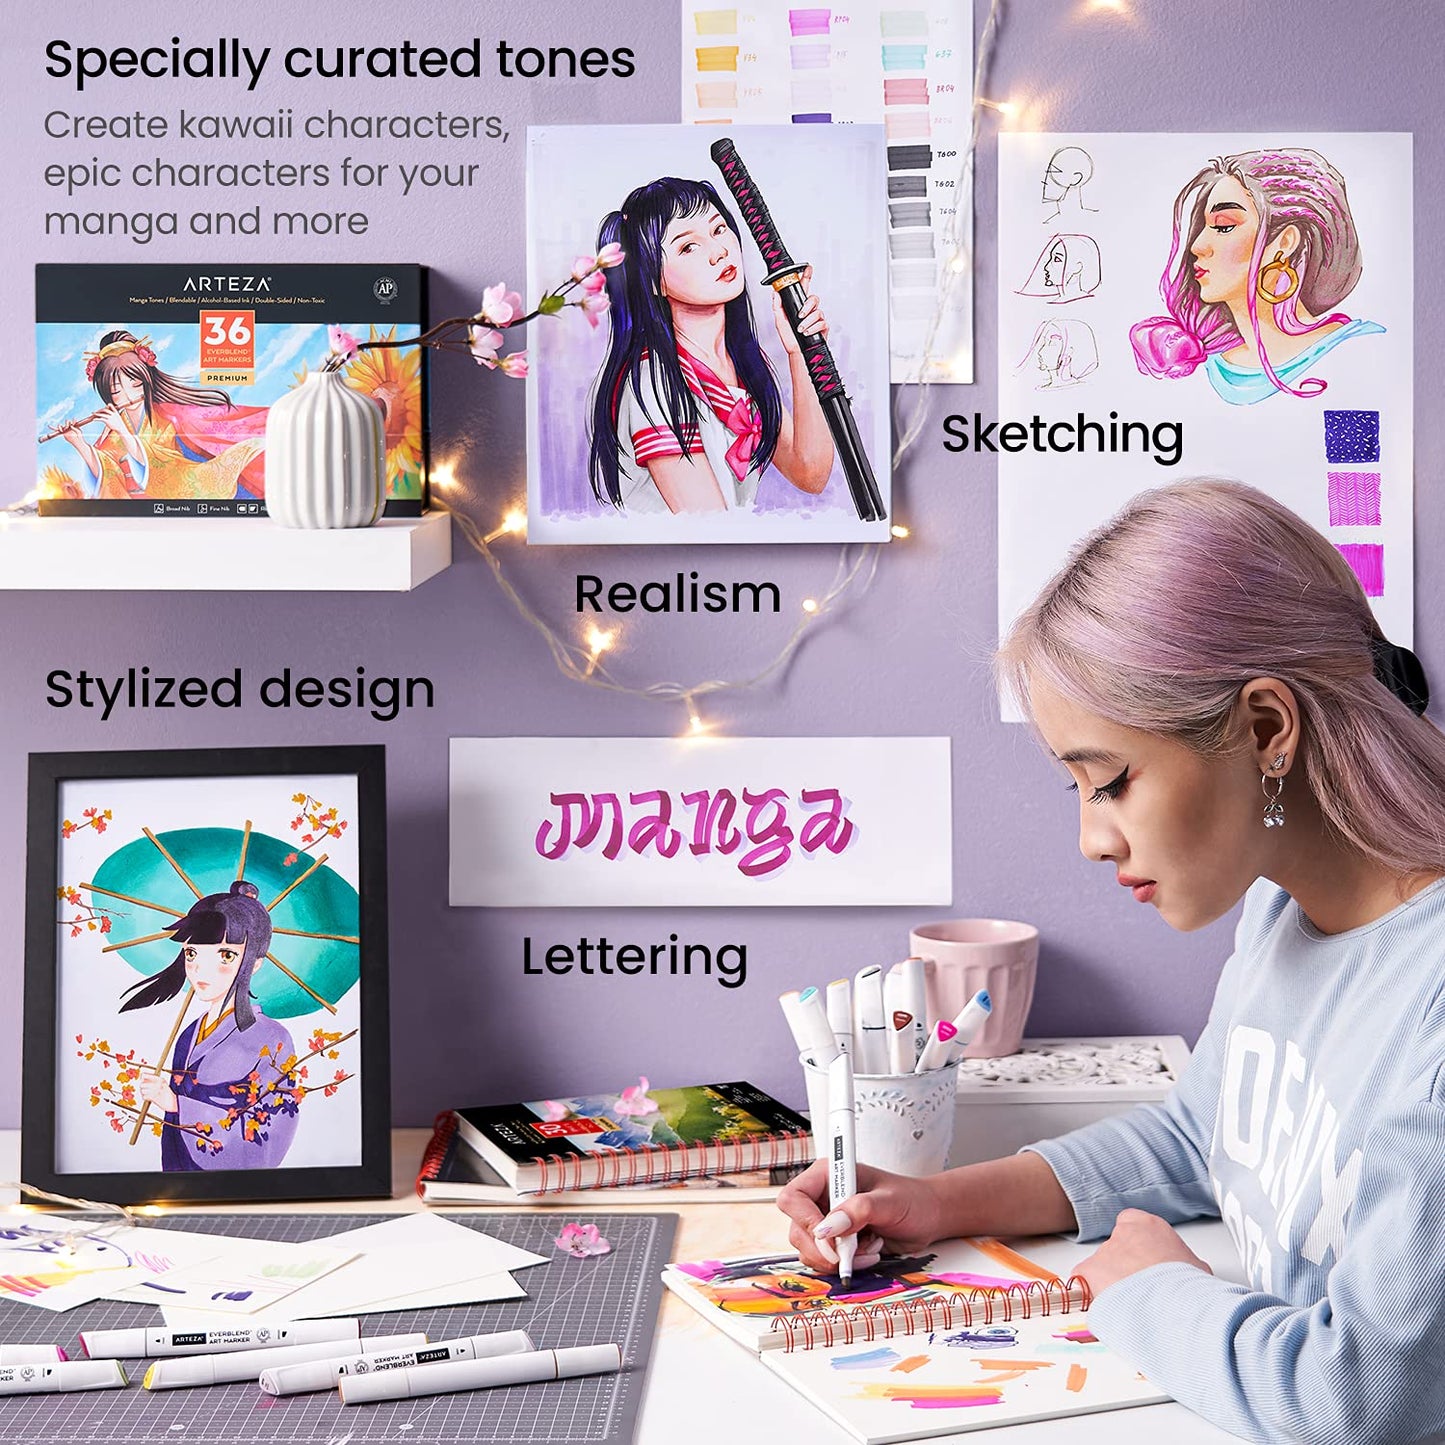 Arteza EverBlend™ Ultra Art Markers, Manga Tones - 36 Colors